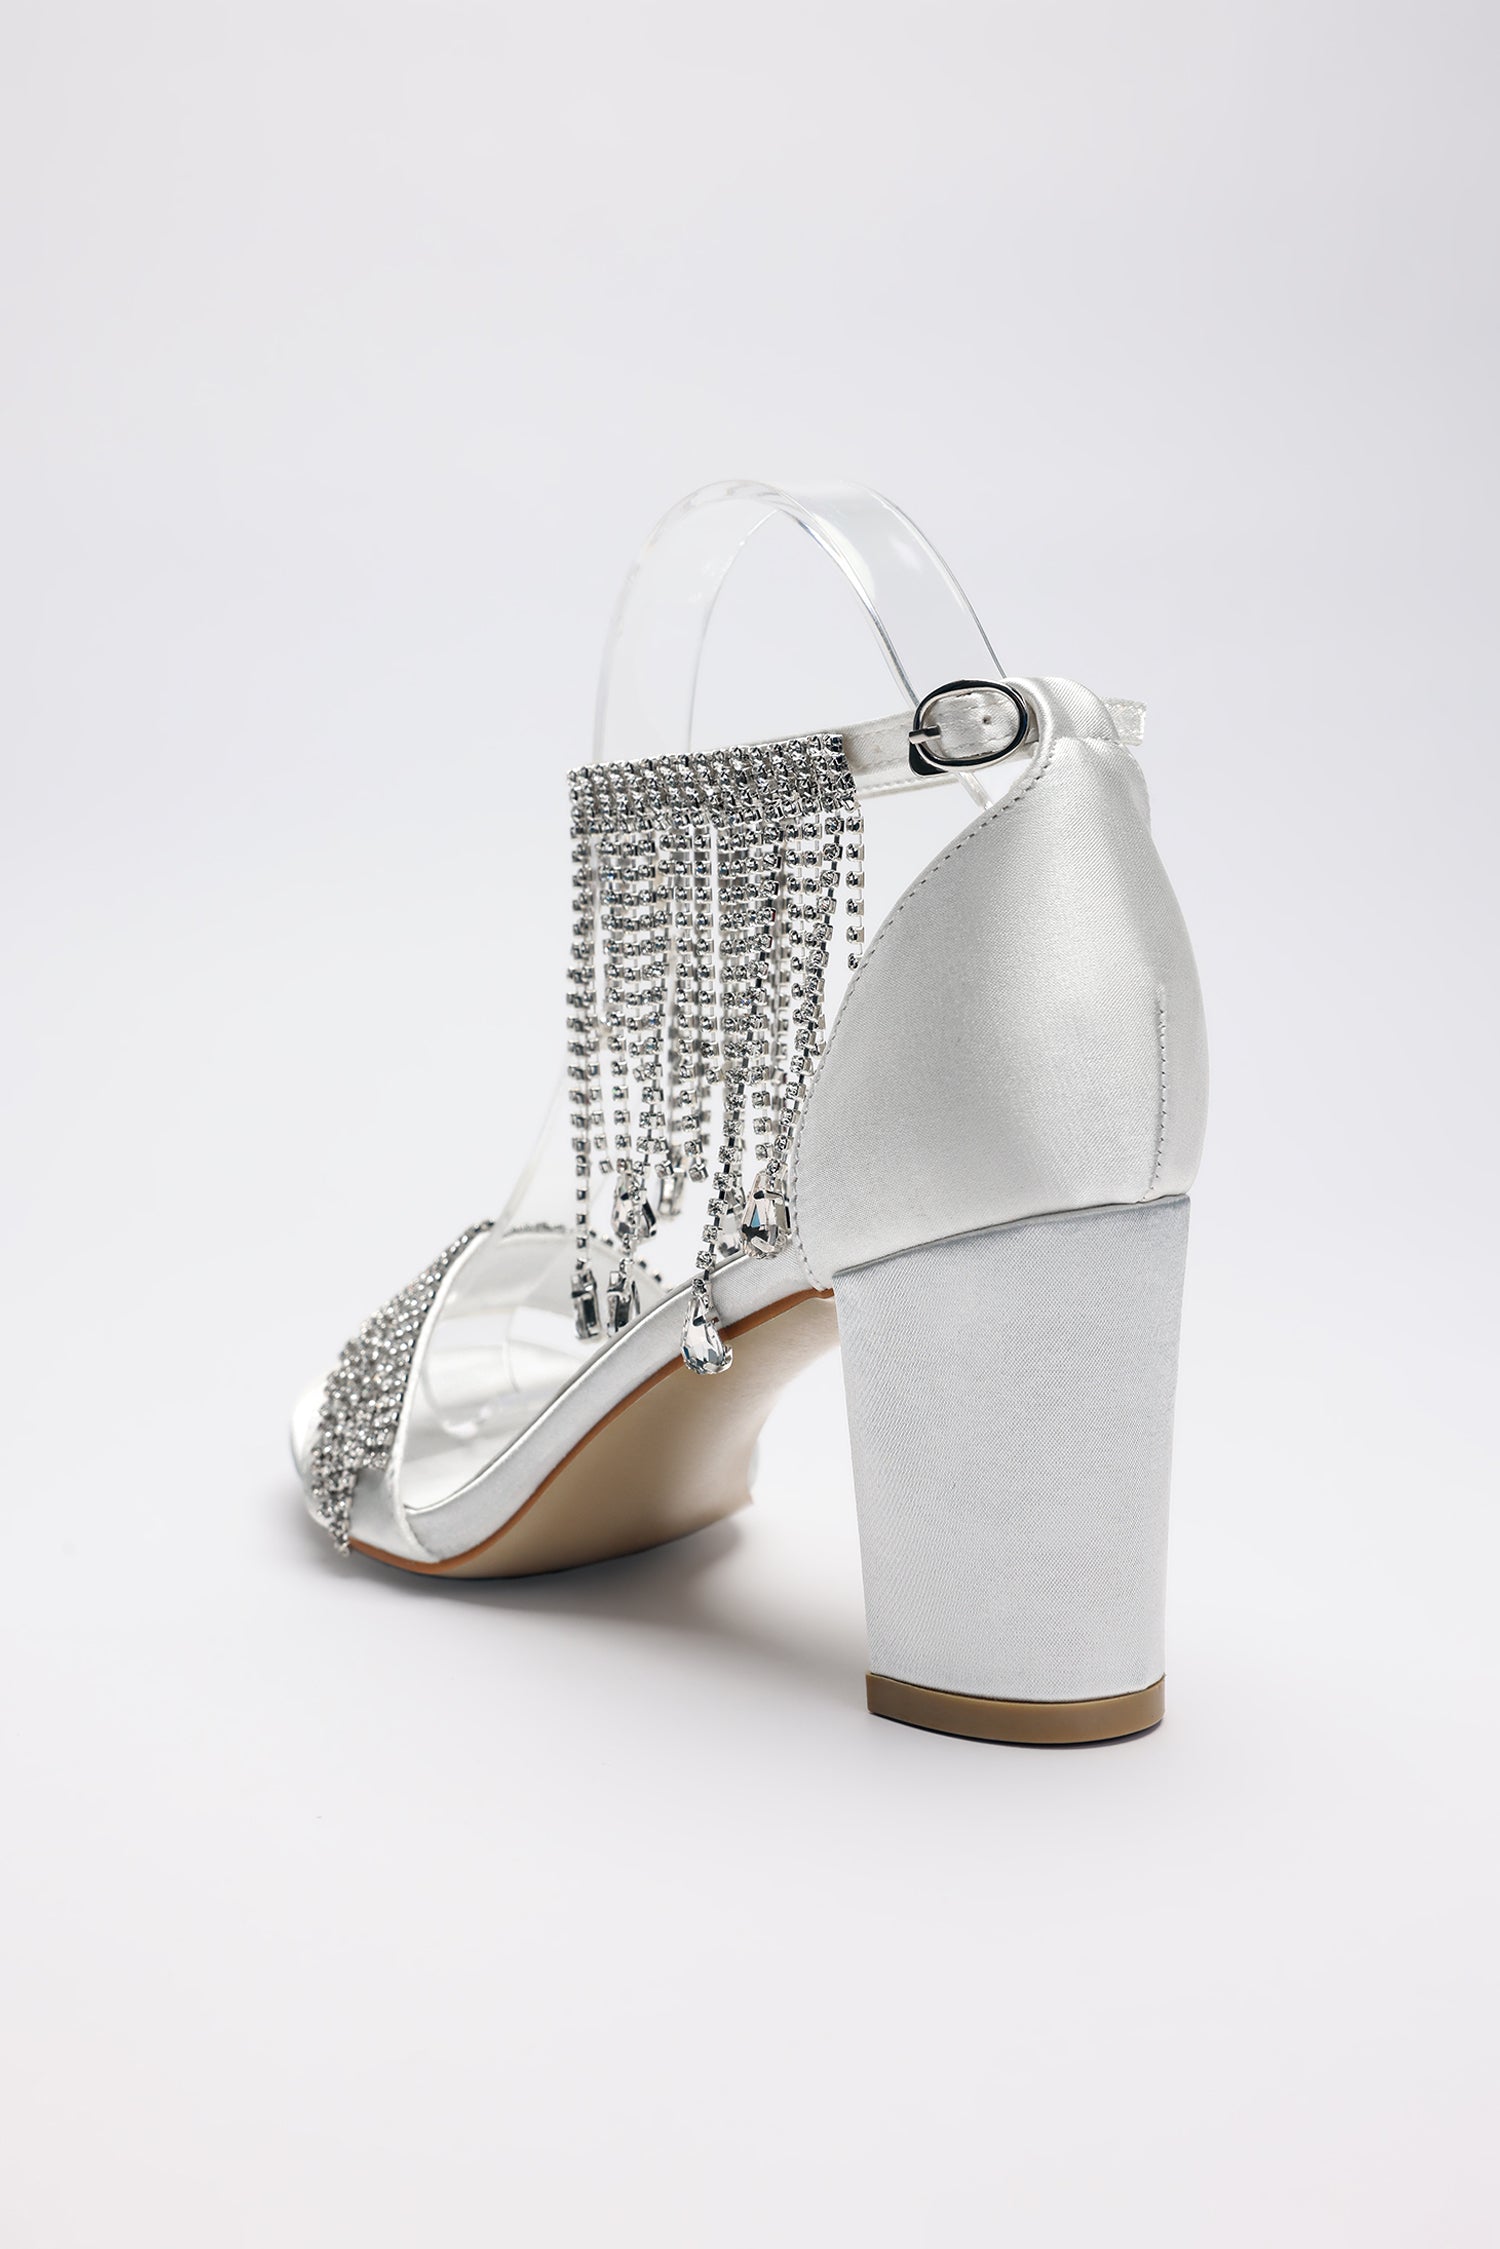 Tassel rhinestone high heels